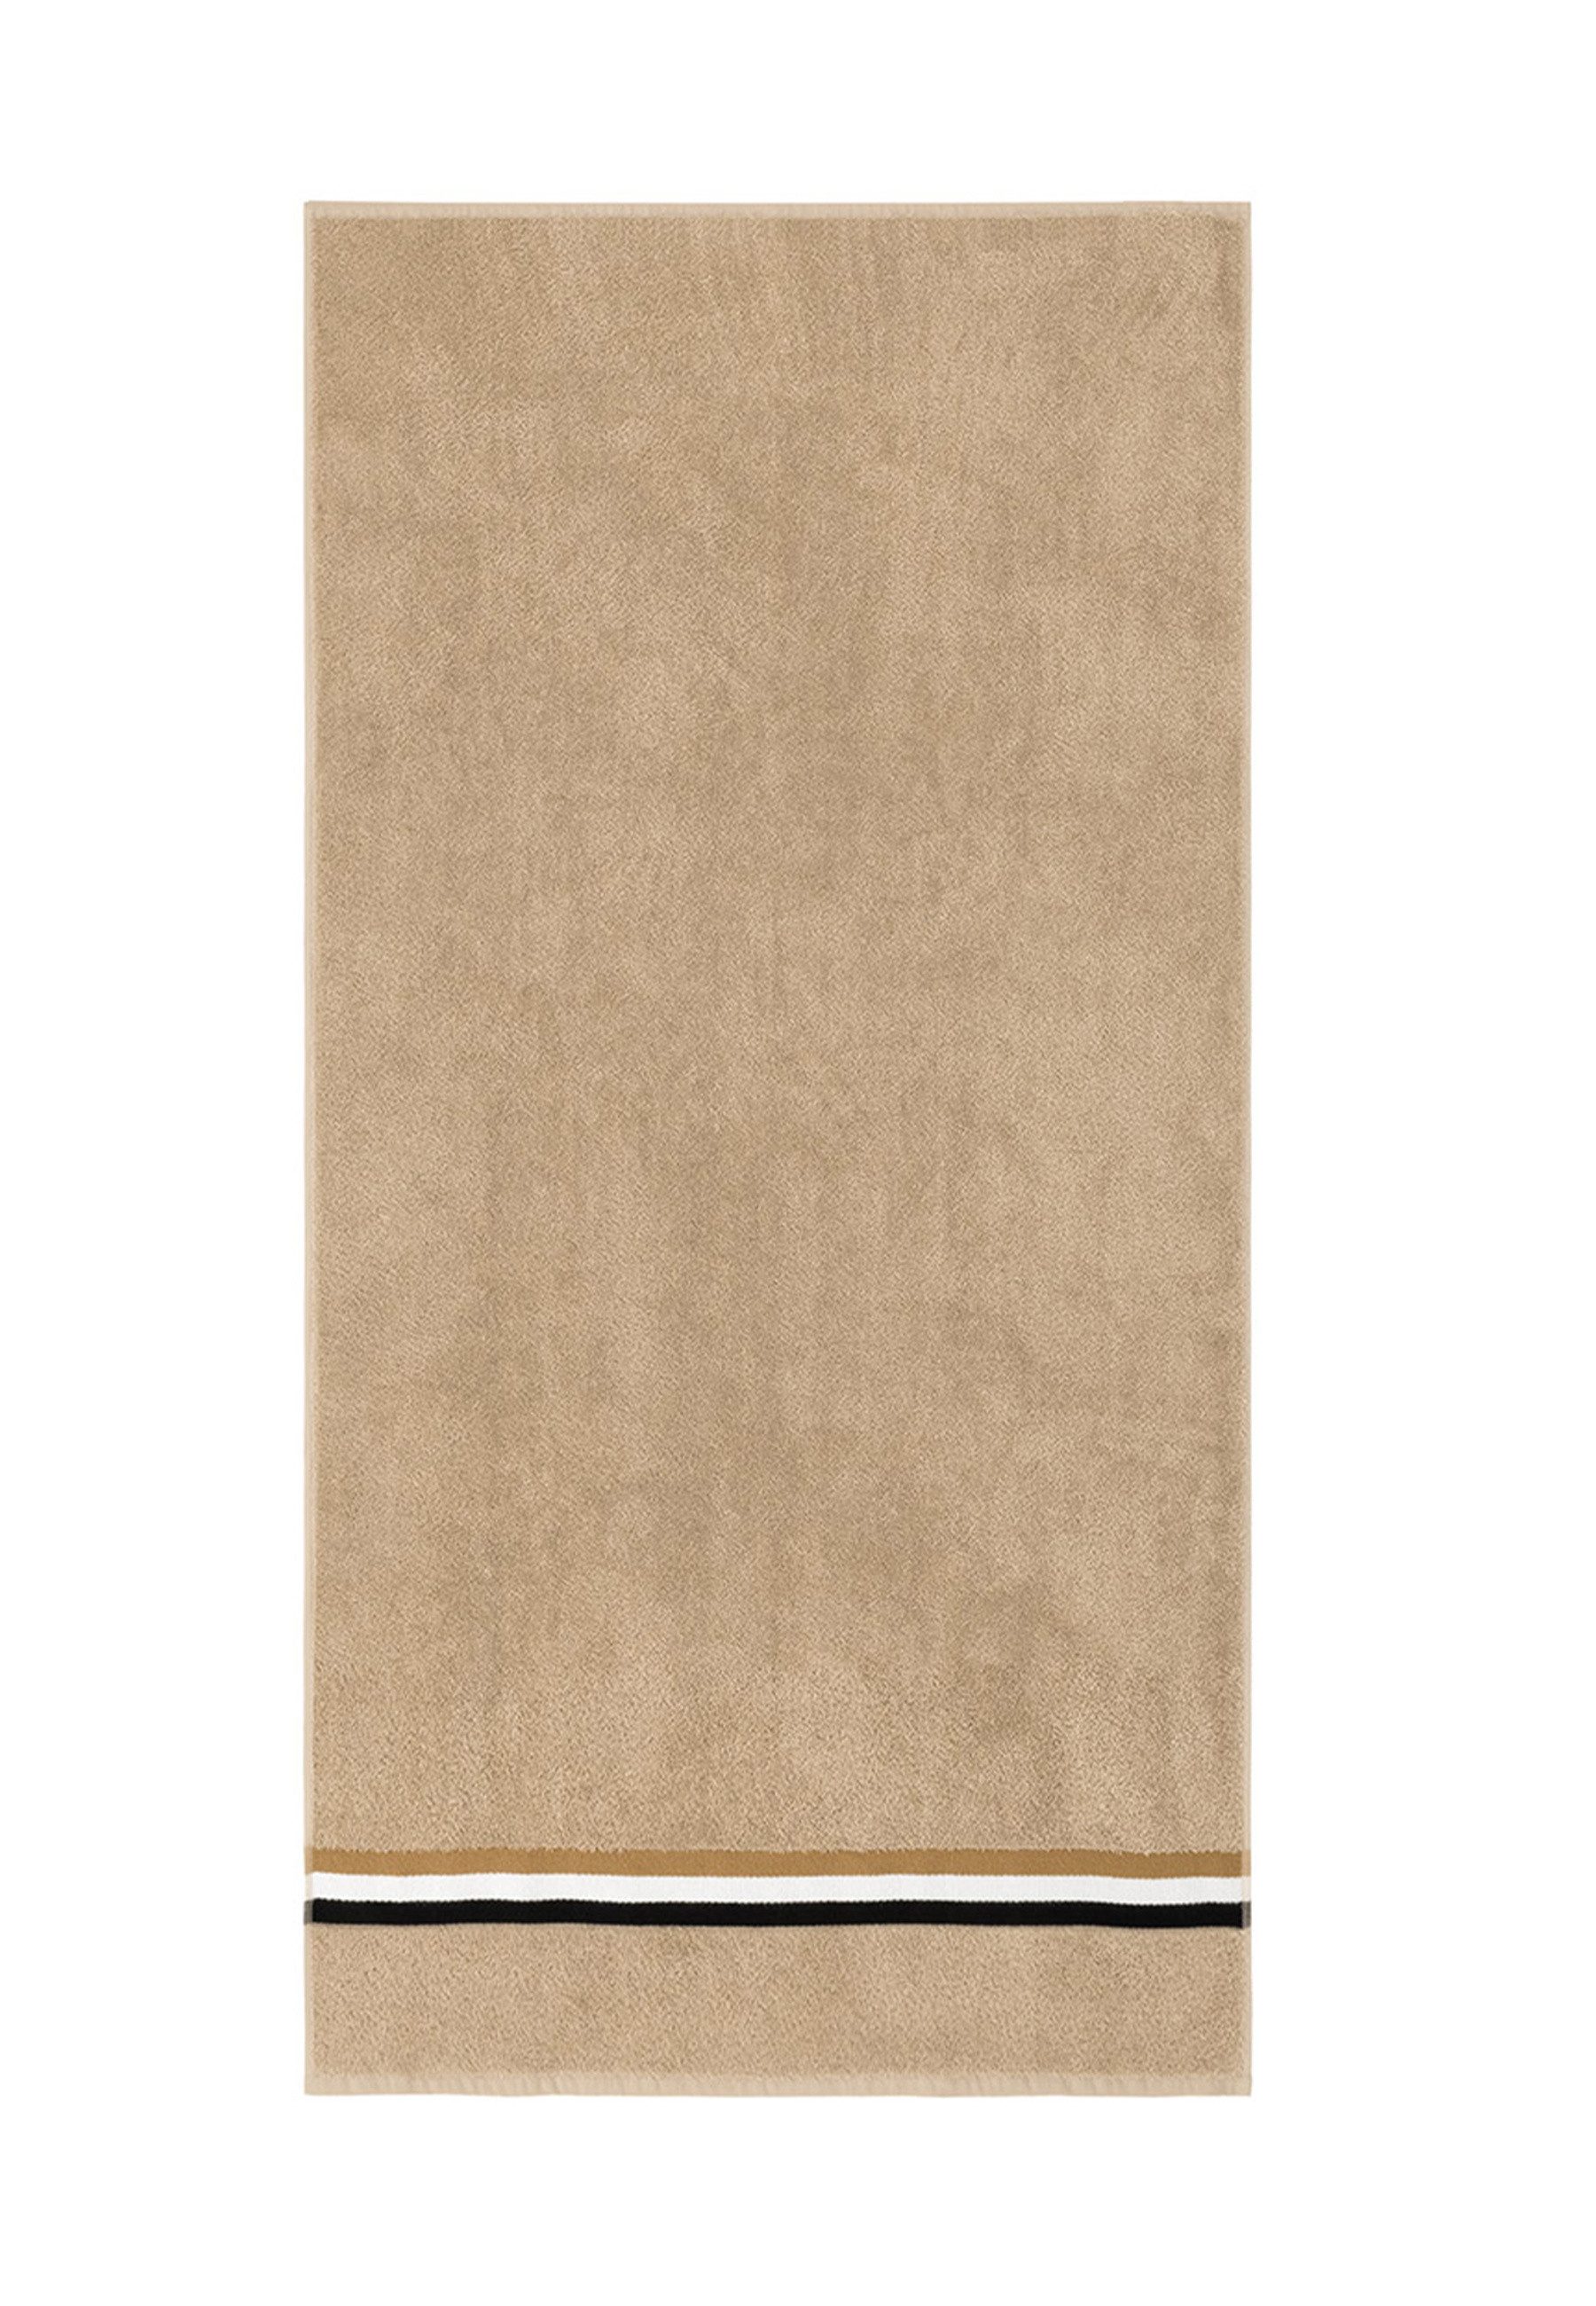 Hugo Boss Home Handtücher Blinea Handtuch, mit Label-Applikationen